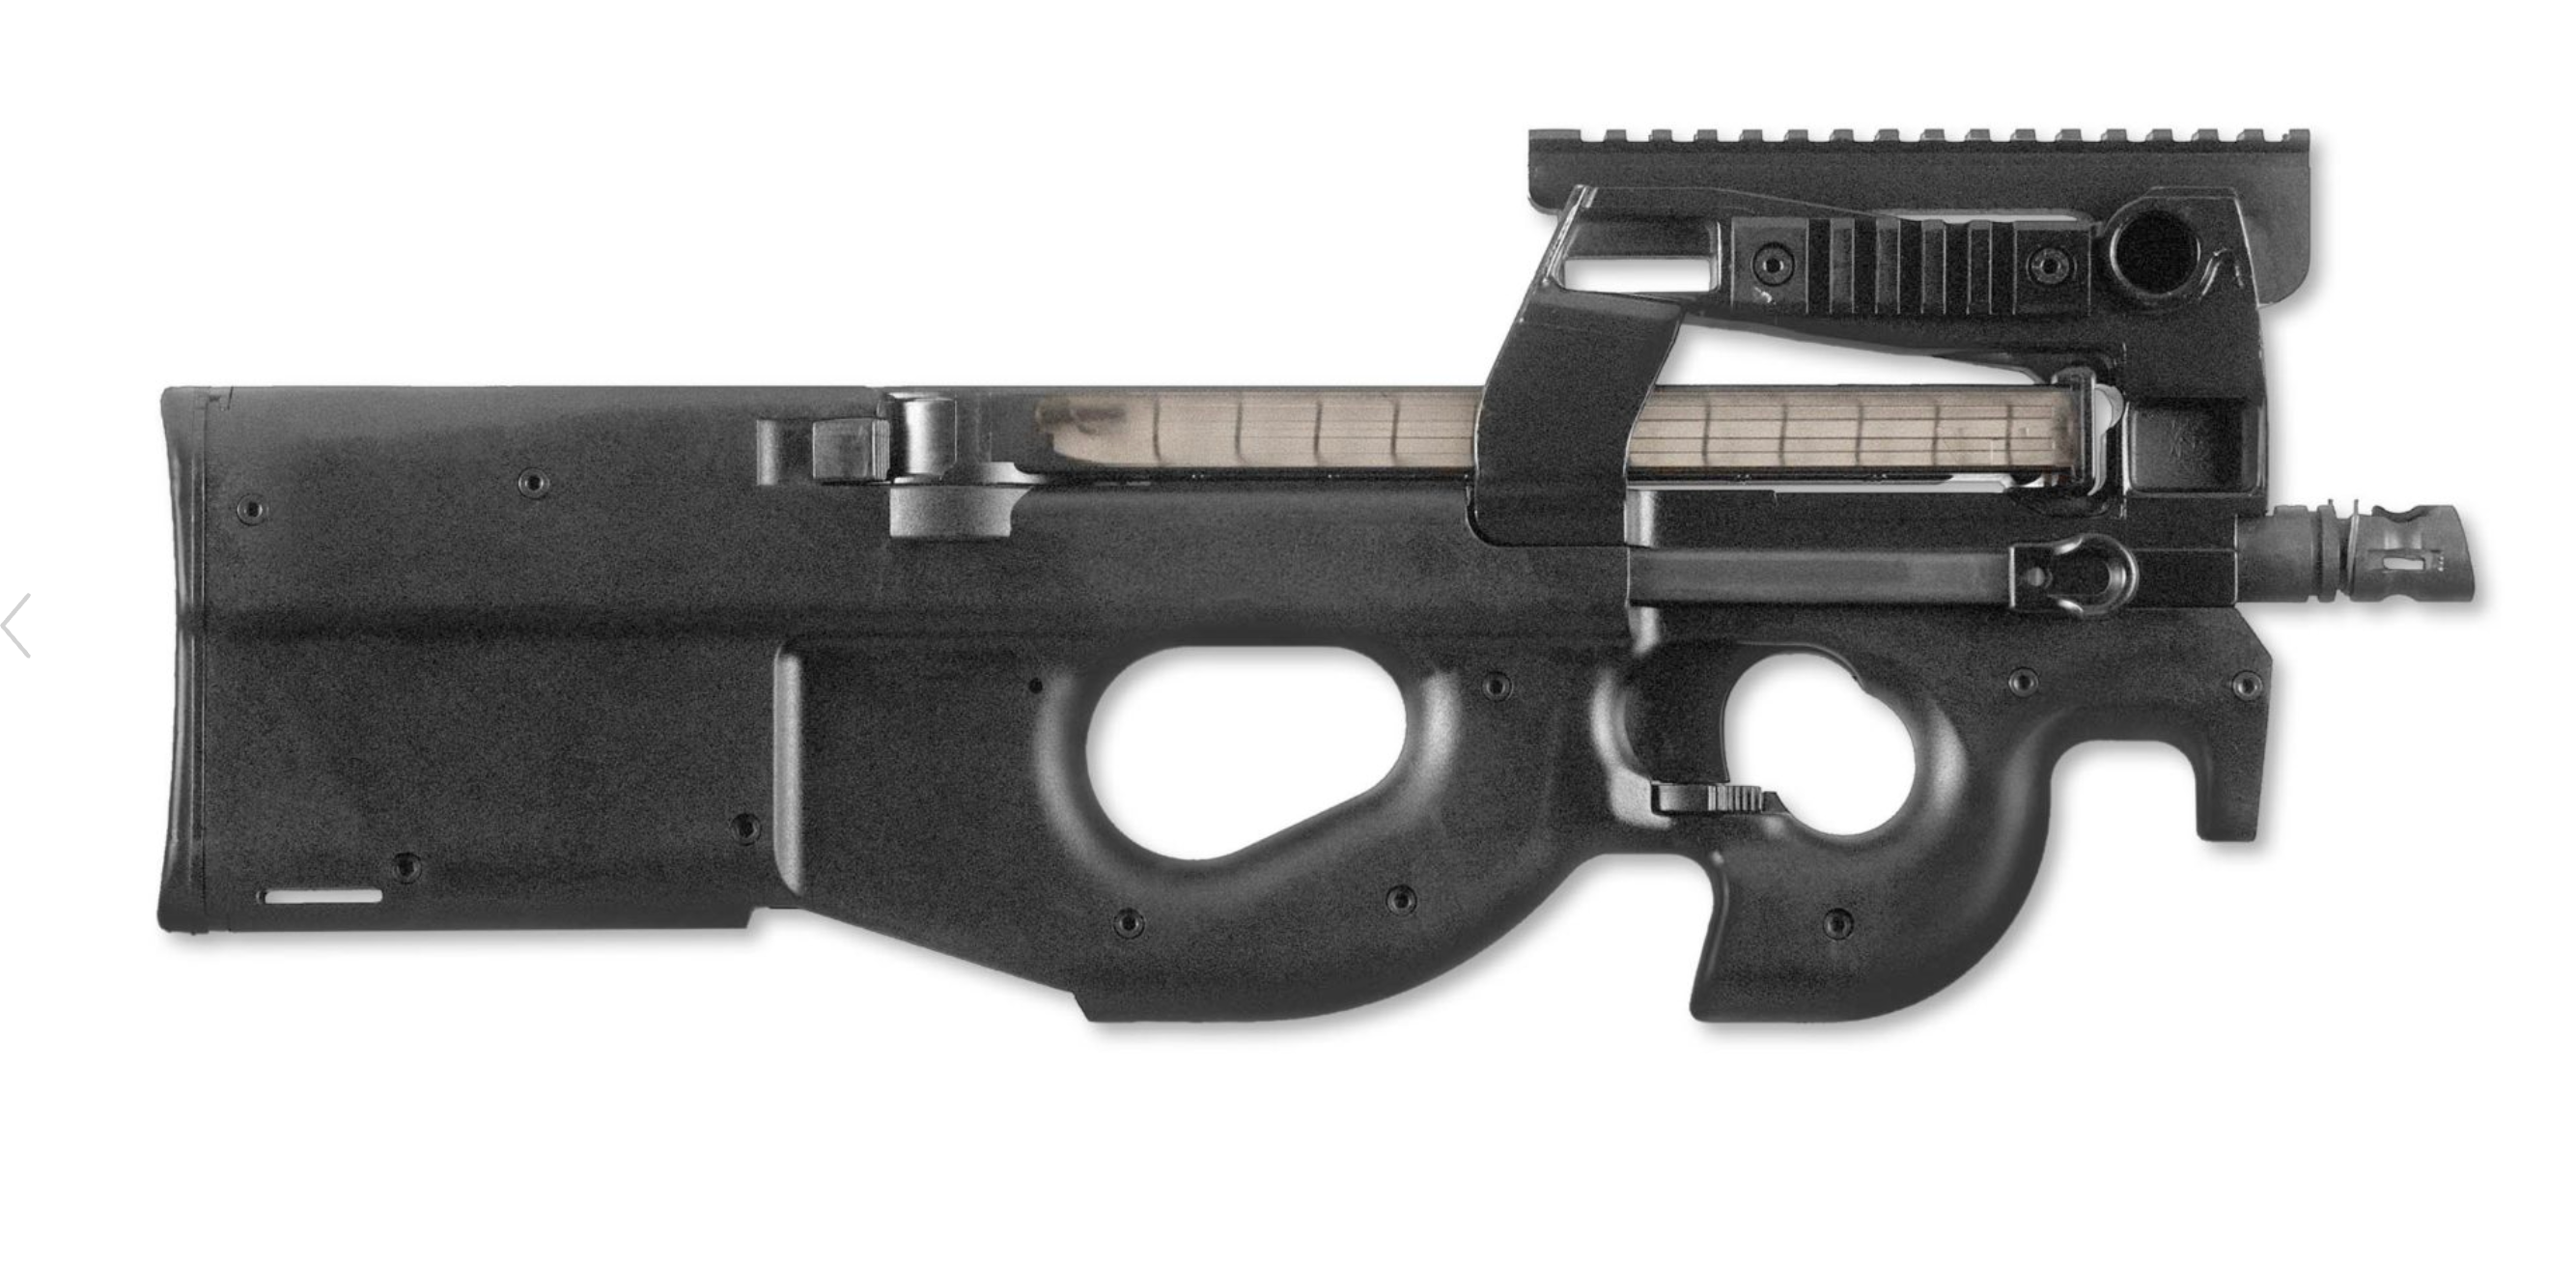 FN P90 ugly guns